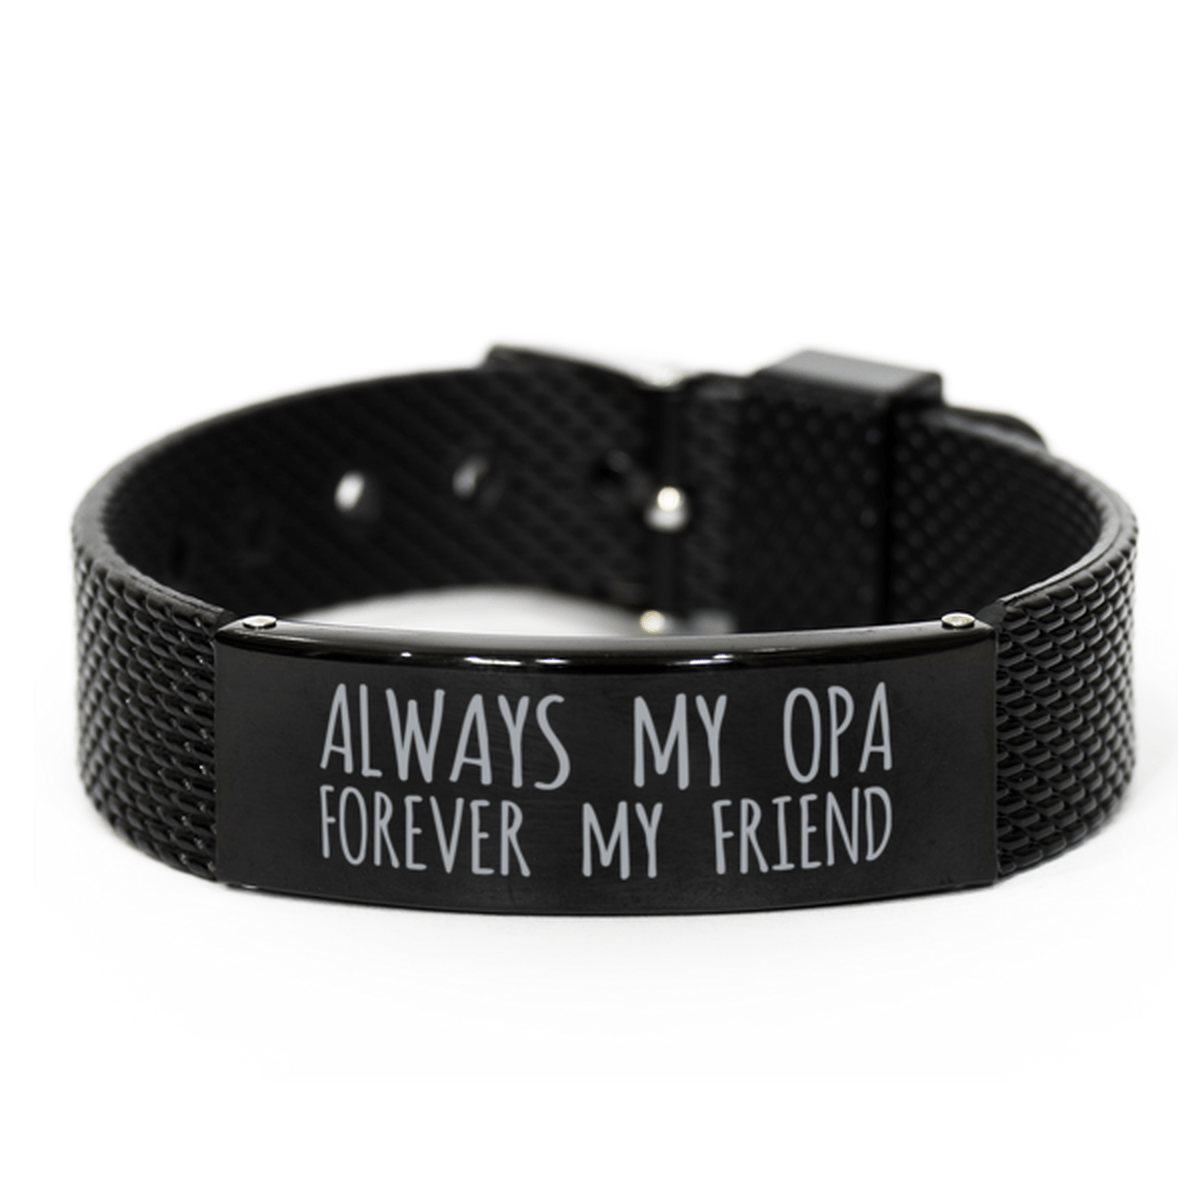 Inspirational Opa Black Shark Mesh Bracelet, Always My Opa Forever My Friend, Best Birthday Gifts for Family Friends